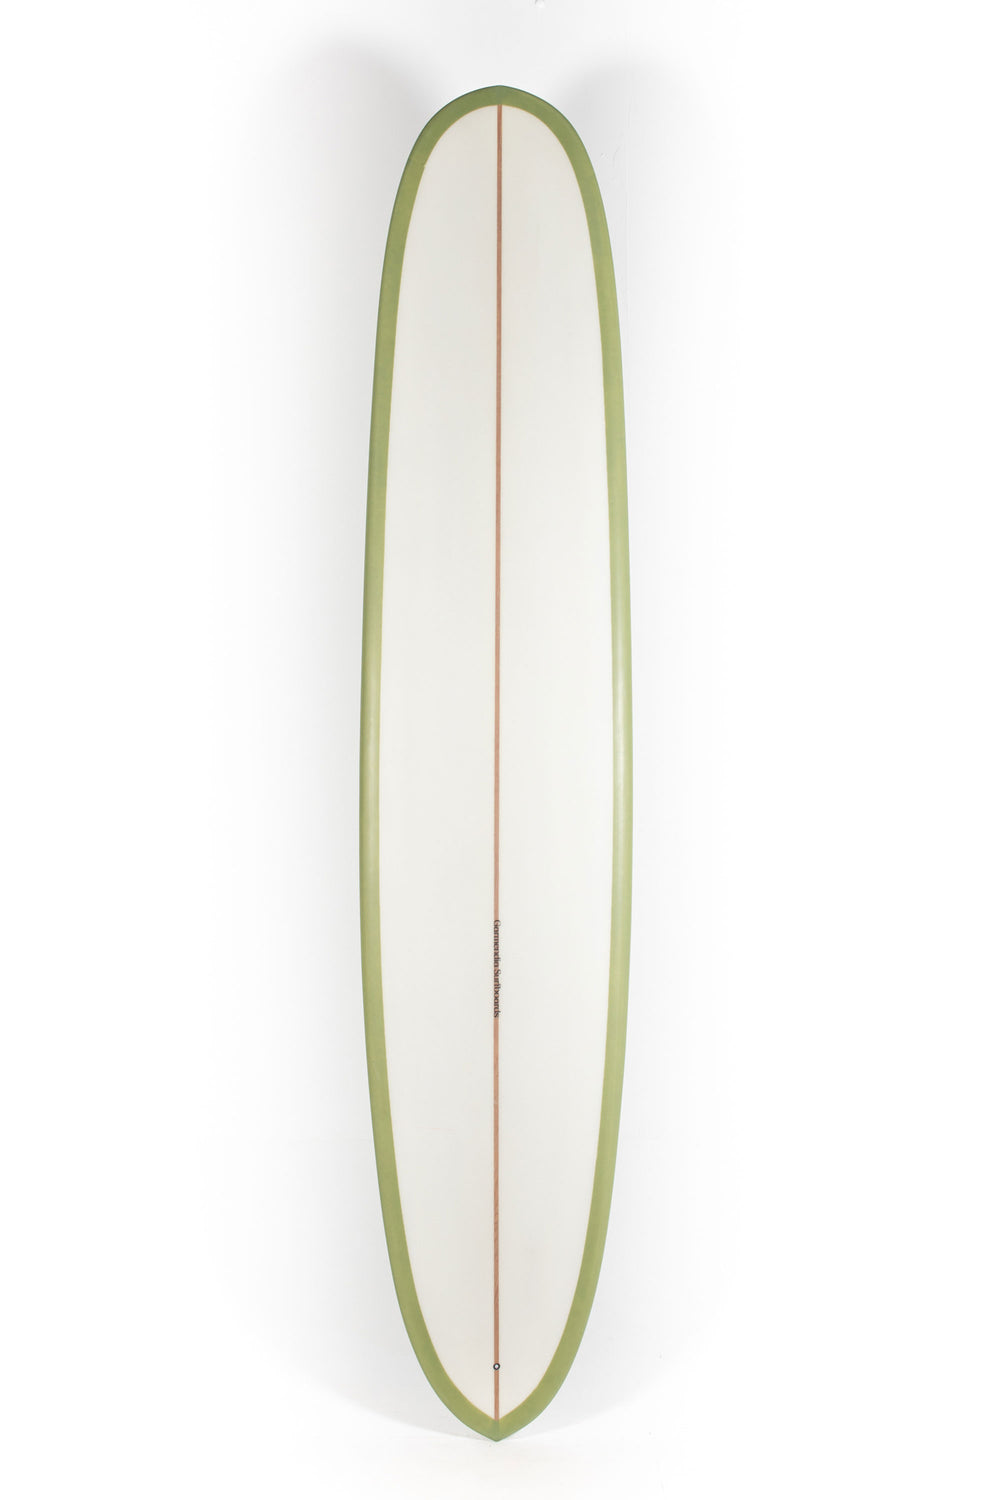 Pukas Surf Shop - Garmendia Surfboards - HAPPY BUDDHA - 9'4